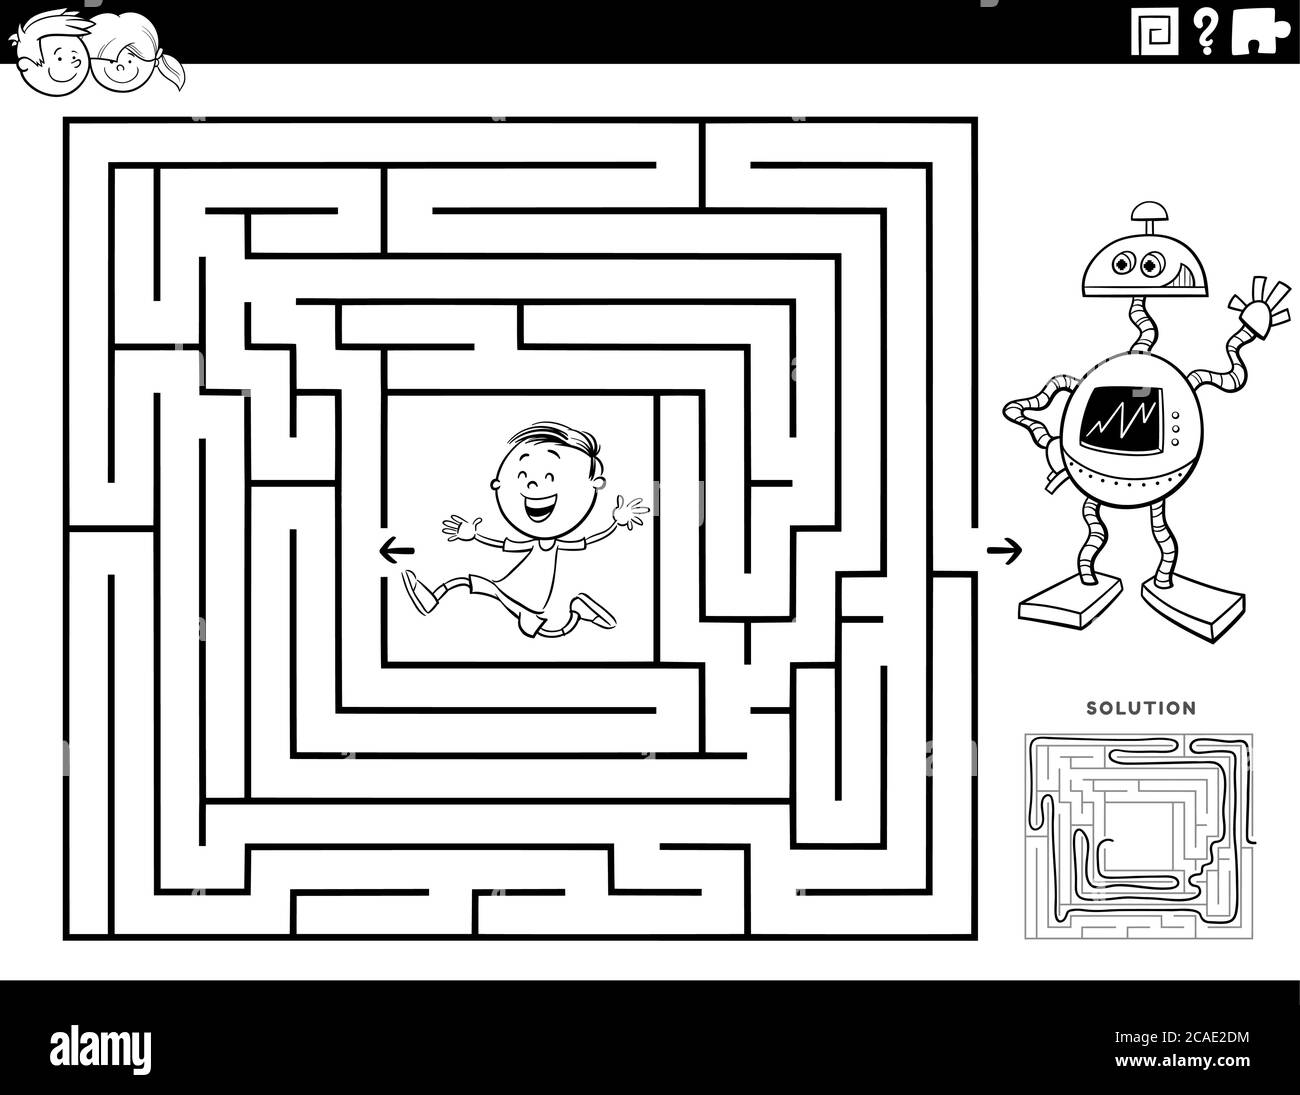 Robot boy cartoon Black and White Stock Photos & Images - Alamy